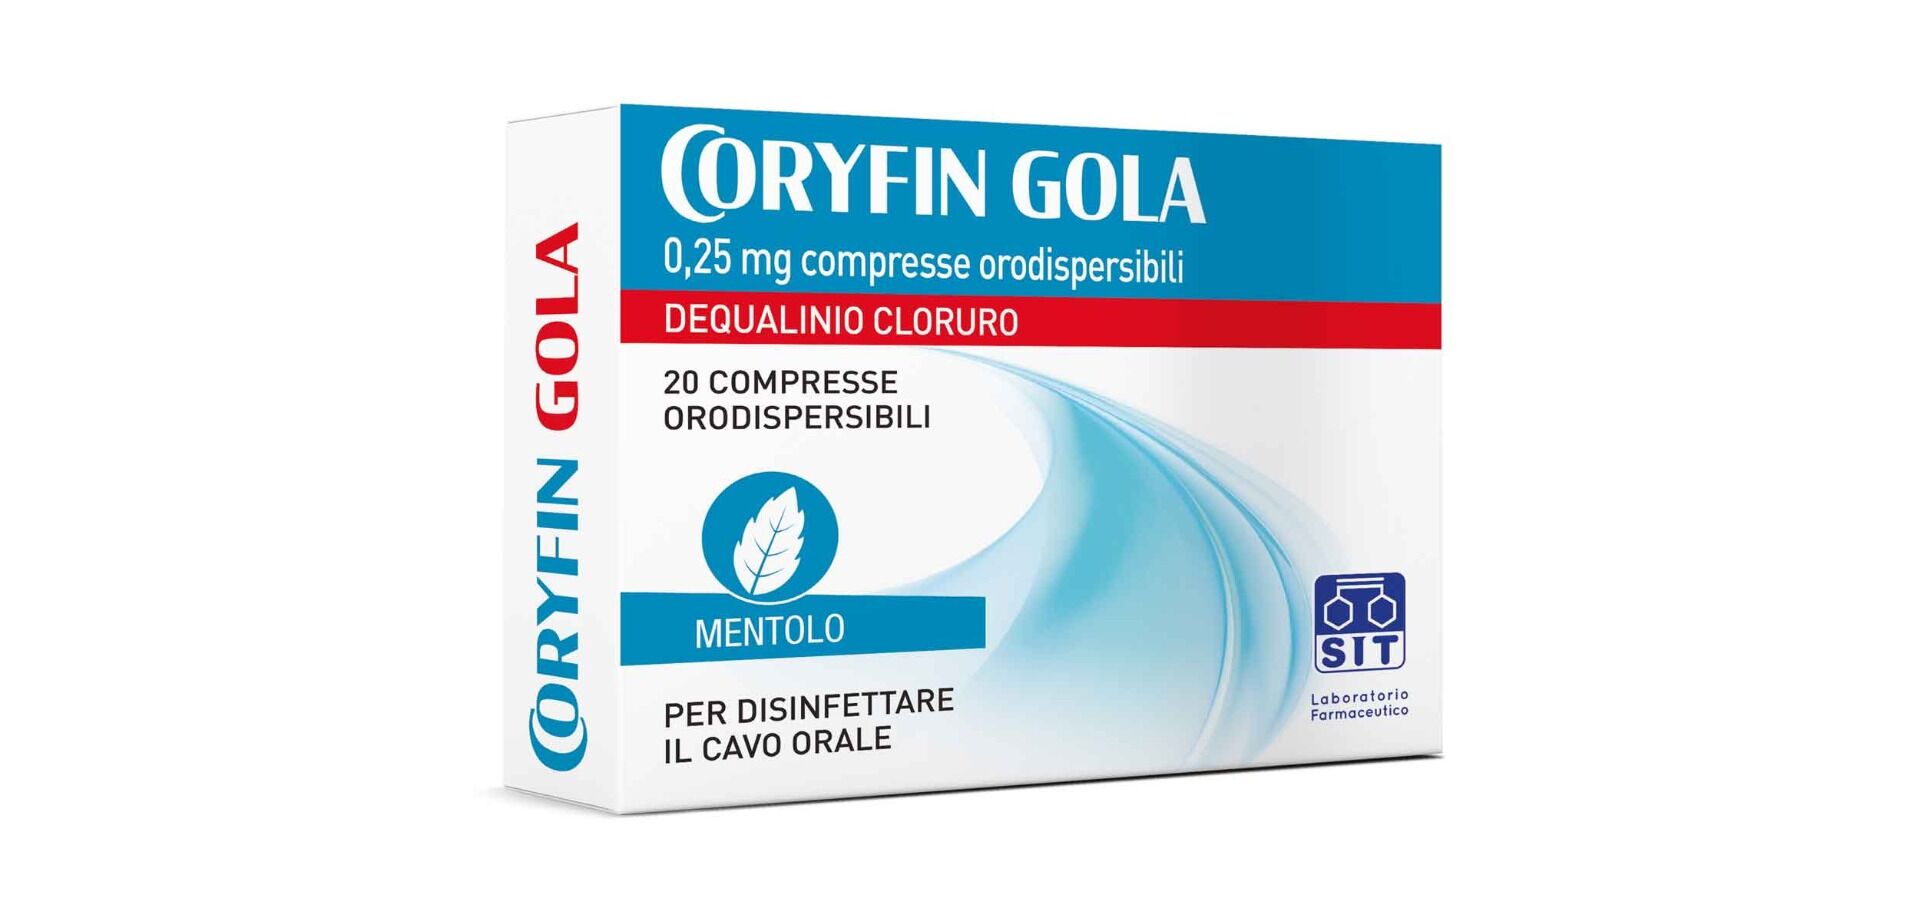 SIT Coryfin Gola 0,25mg 20 compresse orodispersibili